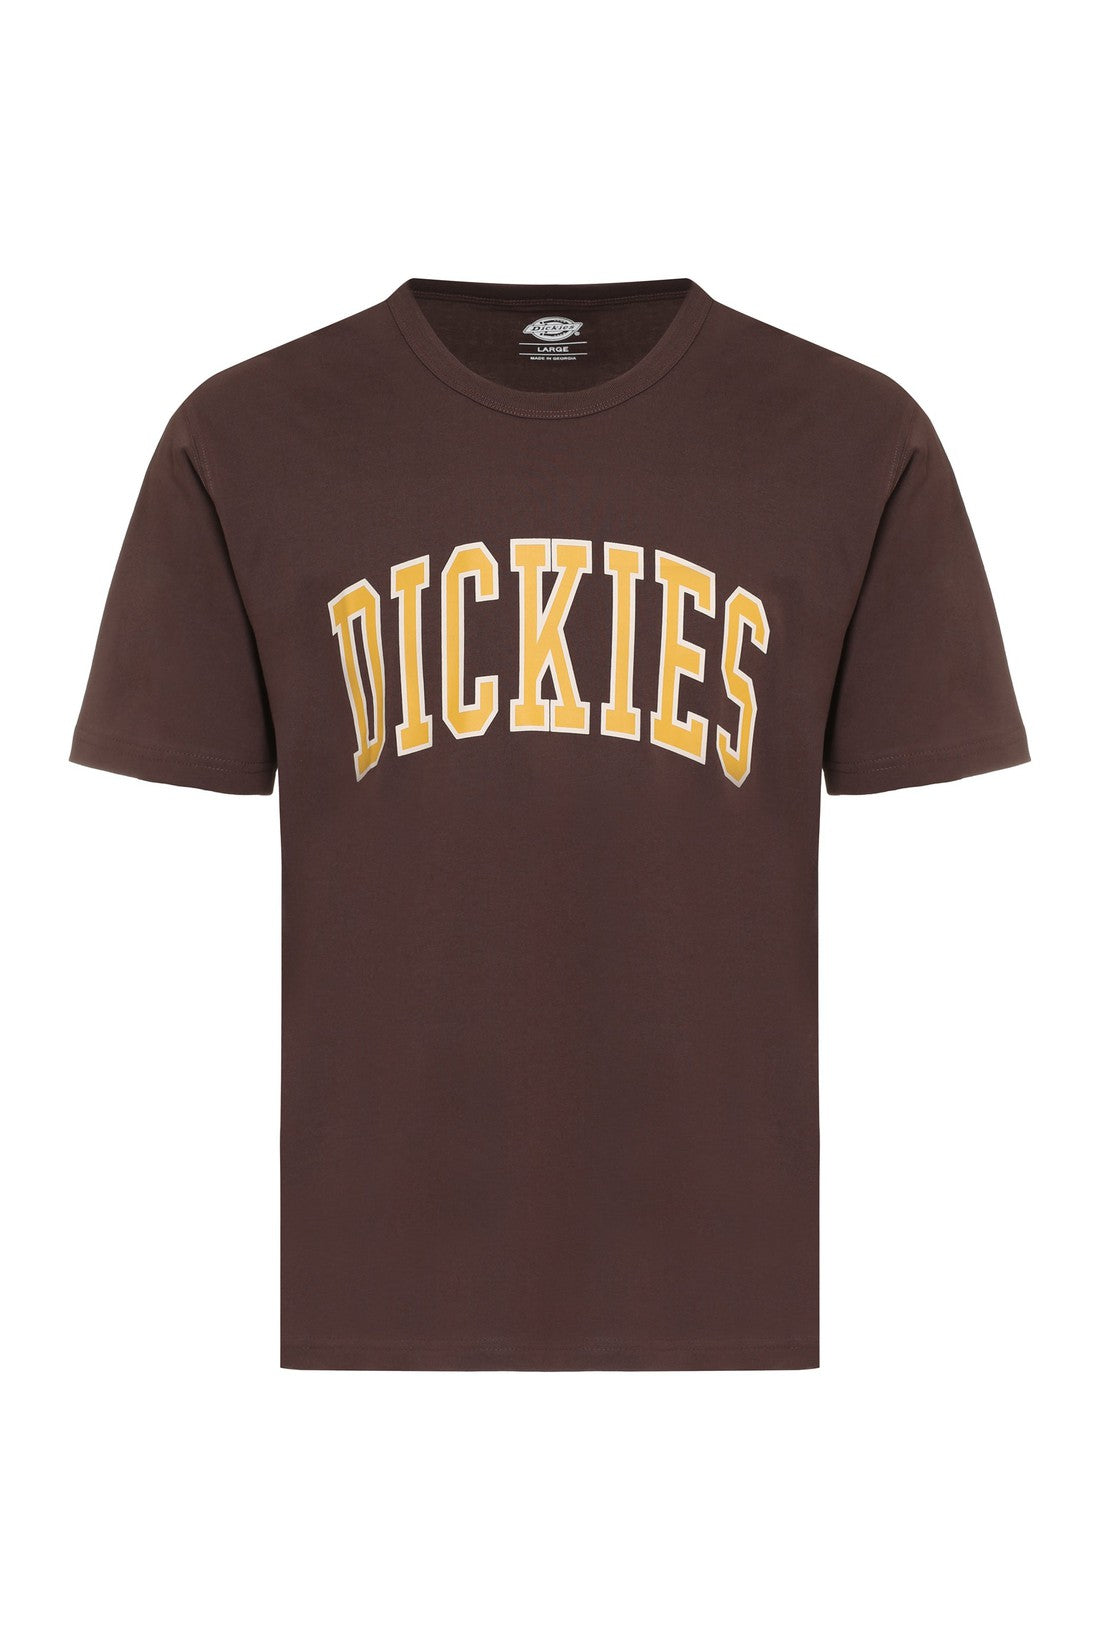 Dickies-OUTLET-SALE-Aitkin logo cotton t-shirt-ARCHIVIST